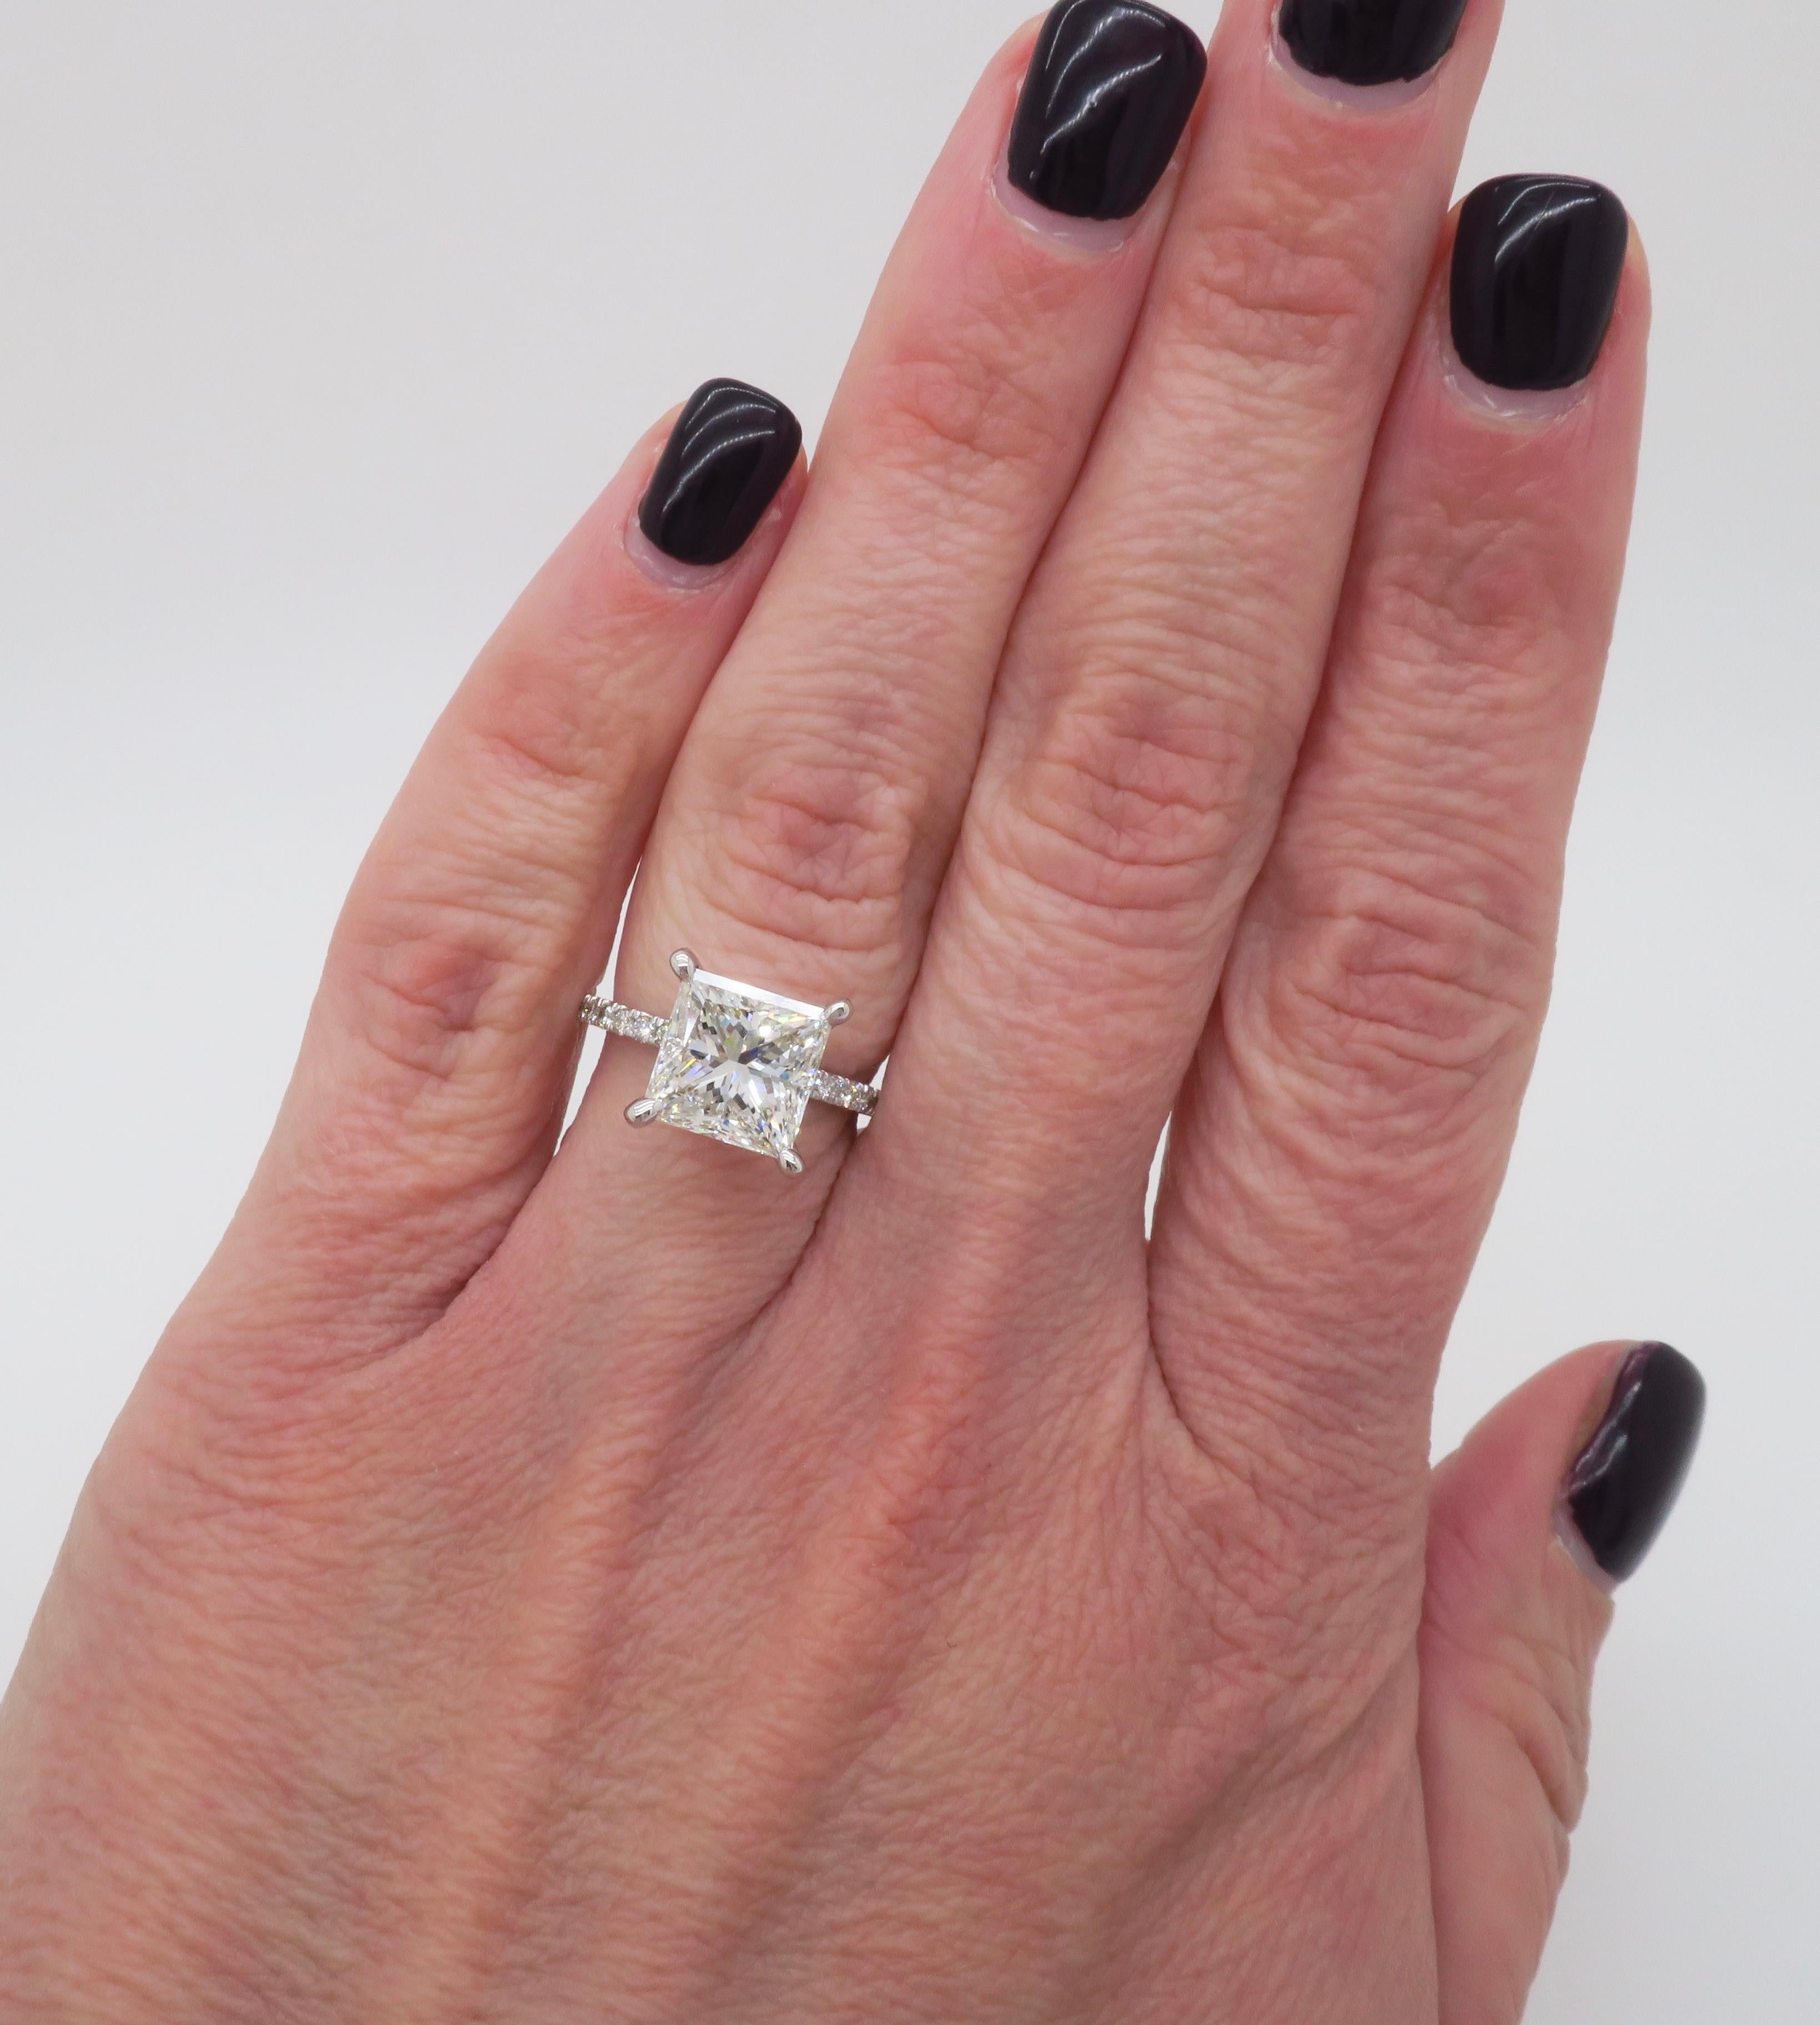 Hidden halo diamond ring set with a stunning 3.07ct GIA certified Princess cut diamond. 

Center Diamond Carat Weight: 3.07CT 
Center Diamond Cut: Princess Cut 
Center Diamond Color: I
Center Diamond Clarity: VS1
Certification: GIA -